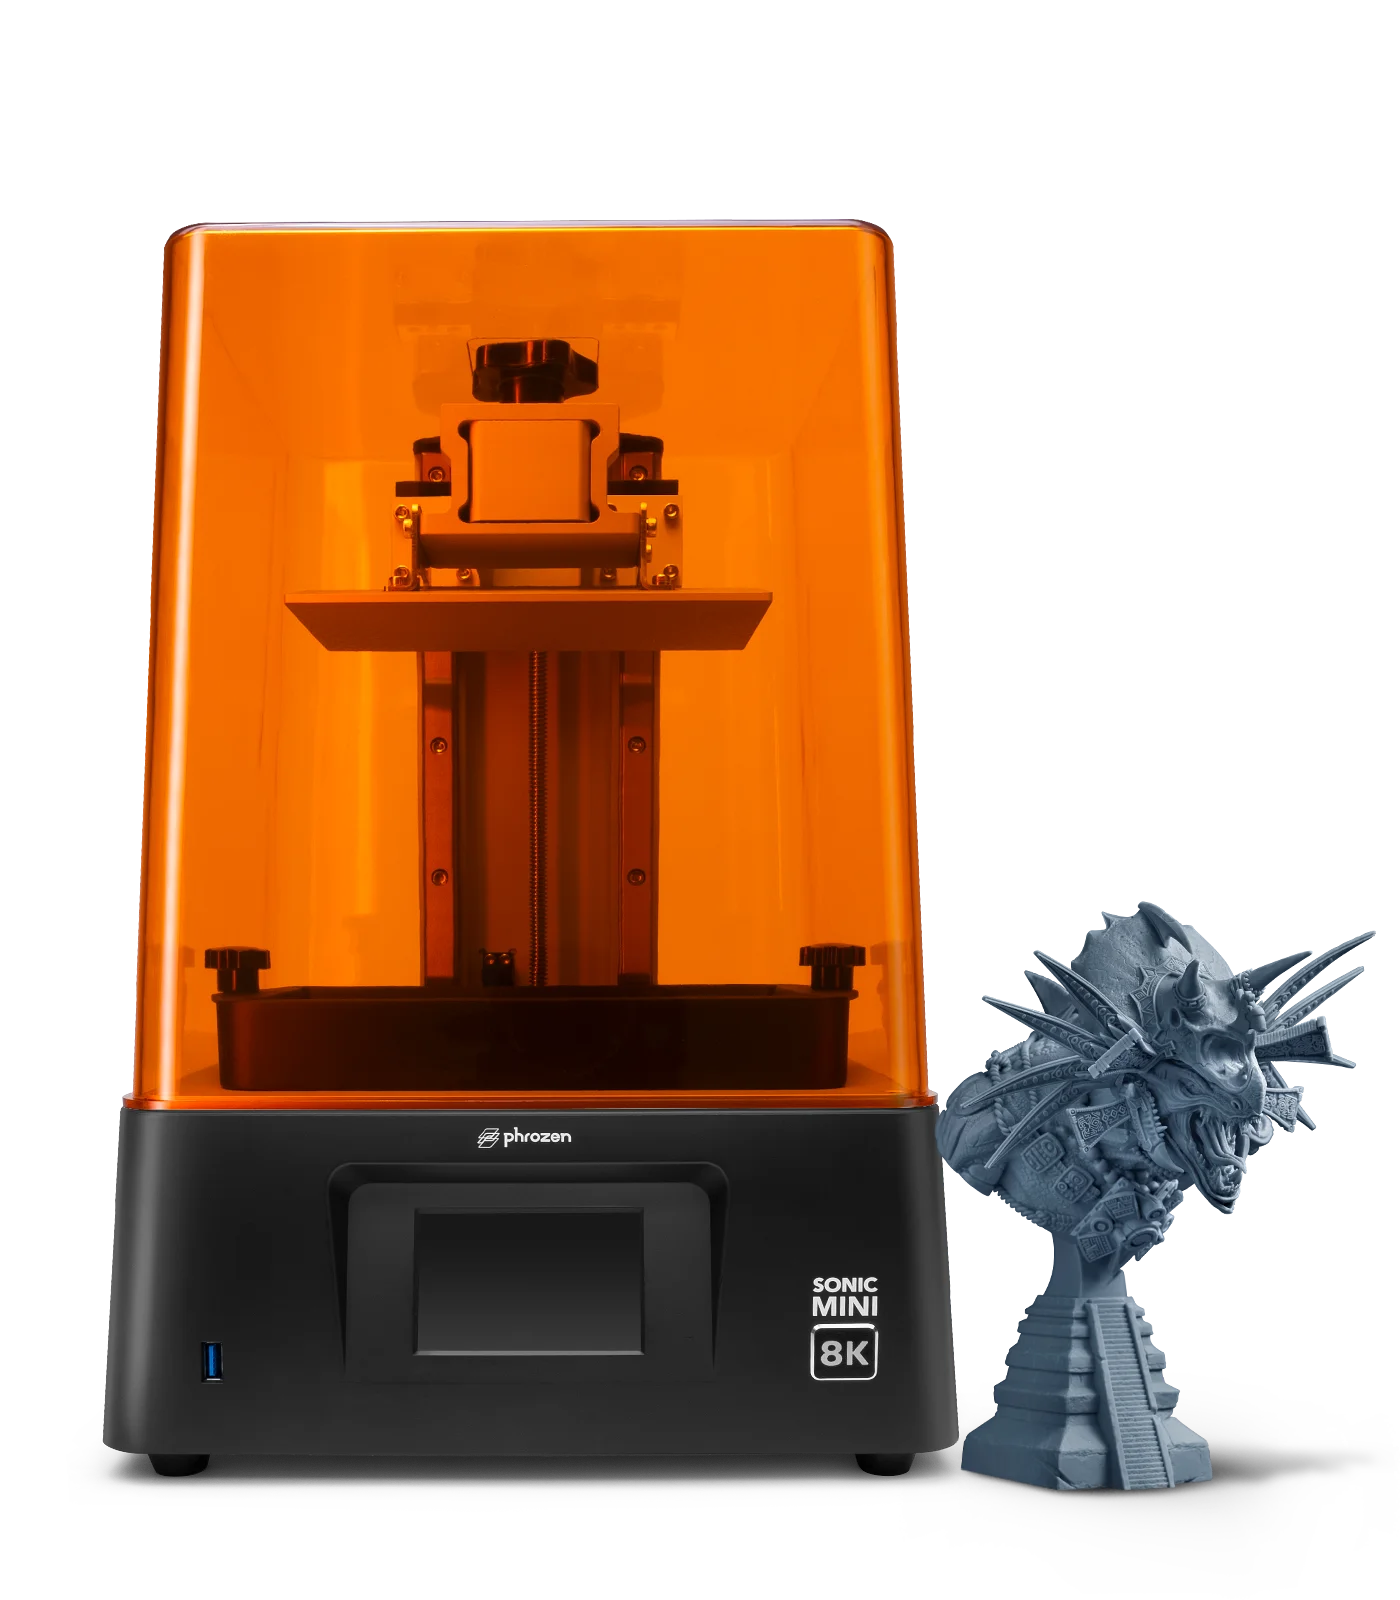 Phrozen Sonic Mini 8K LCD Resin 3D Printer 7.1inch Mono  Screen Highest Resolution of 22 um and 1152 ppi Prints